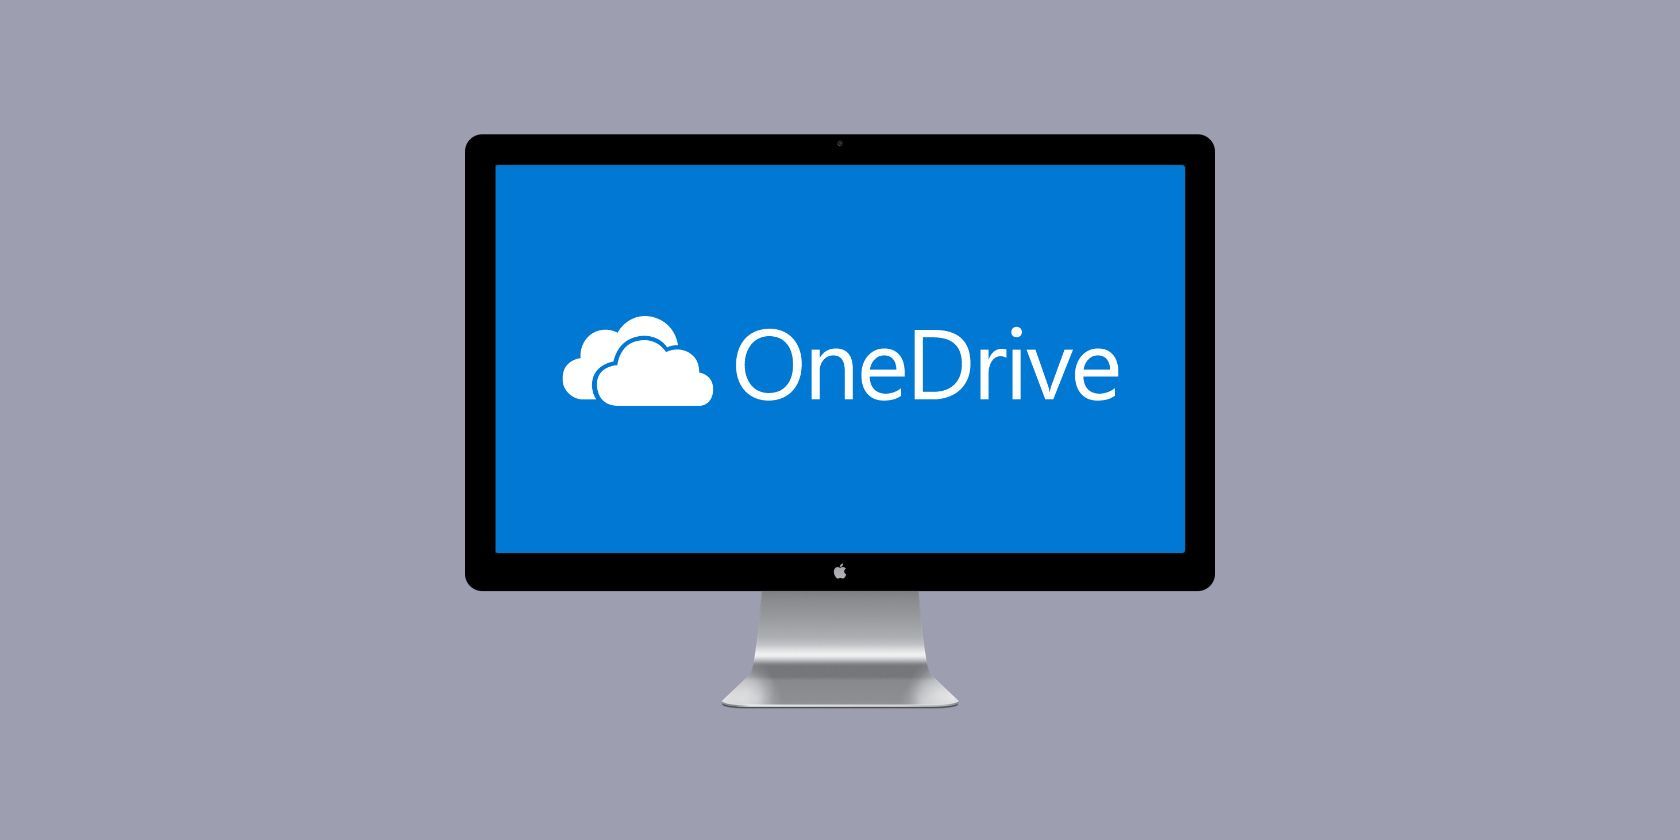 The OneDrive Logo